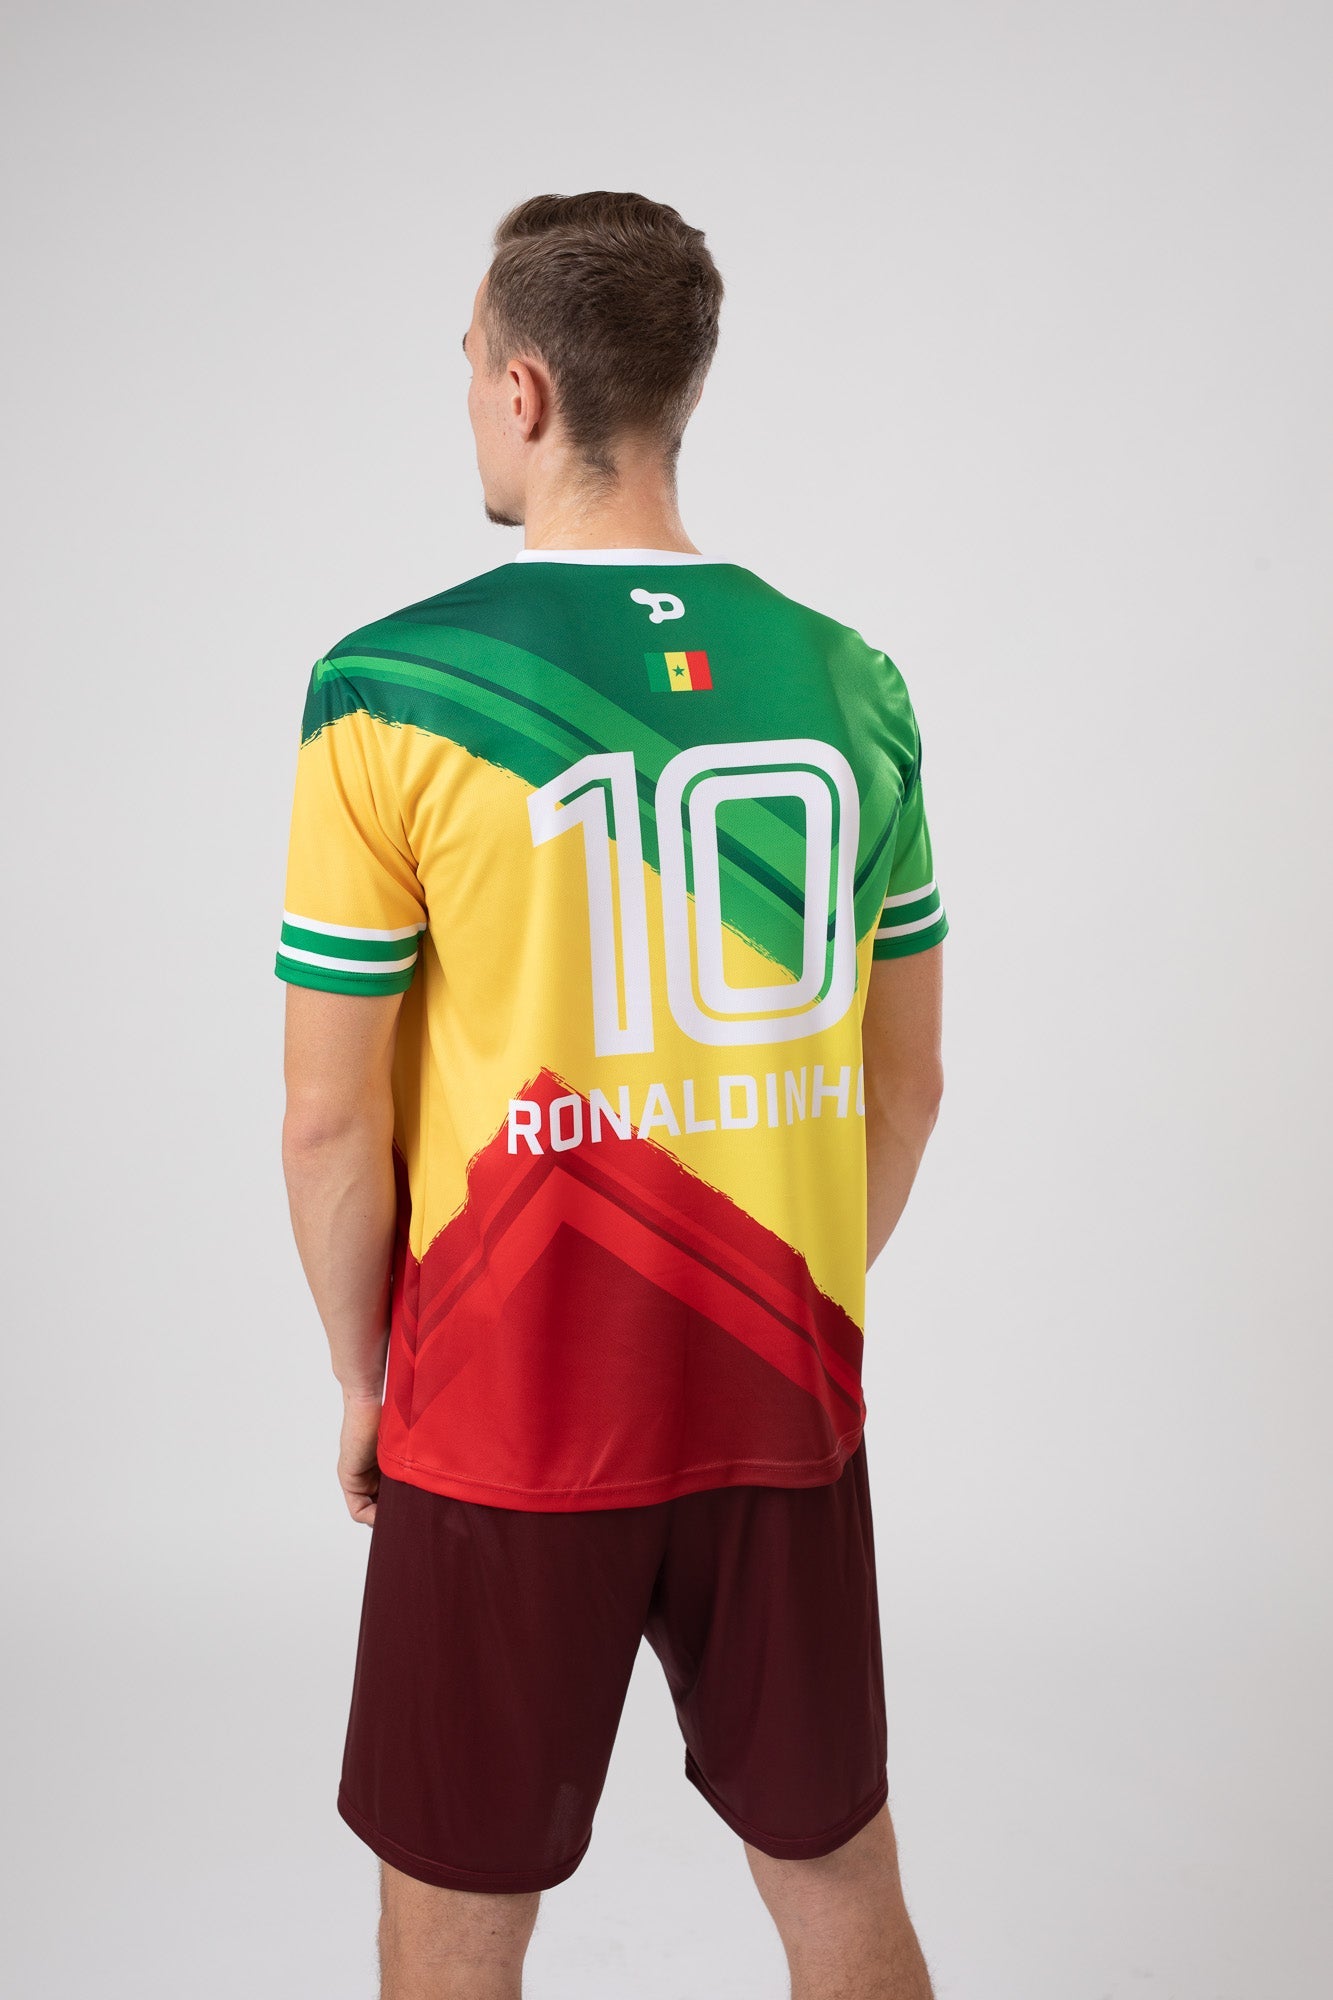 Ronaldinho Senegal Jersey/Camisa Replica Wholesale